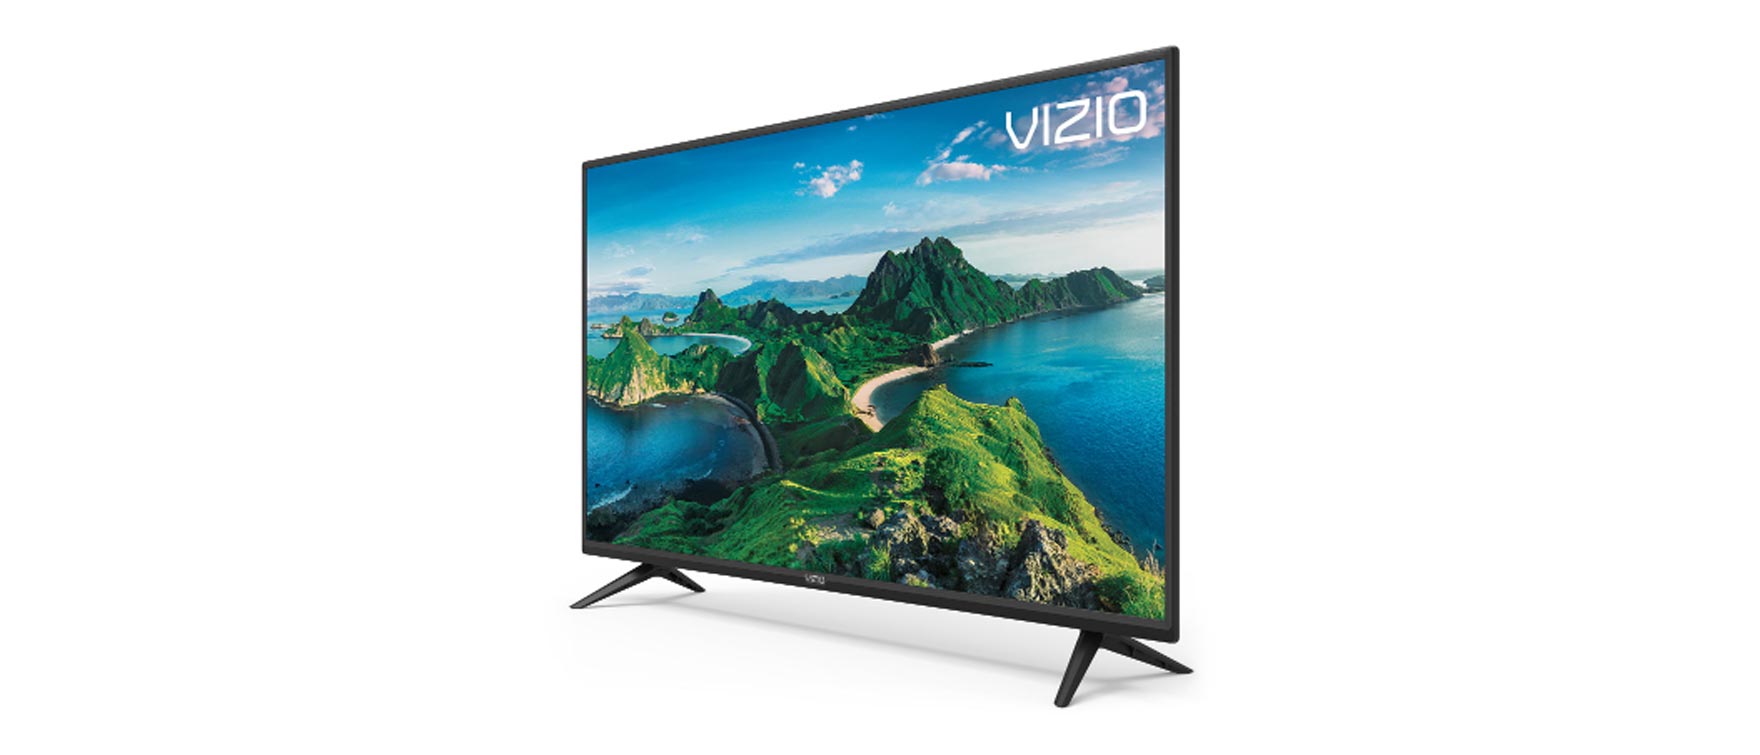 6. Best Backlight Performance: VIZIO 40-inch D-Series Full-Array LED Smart TV